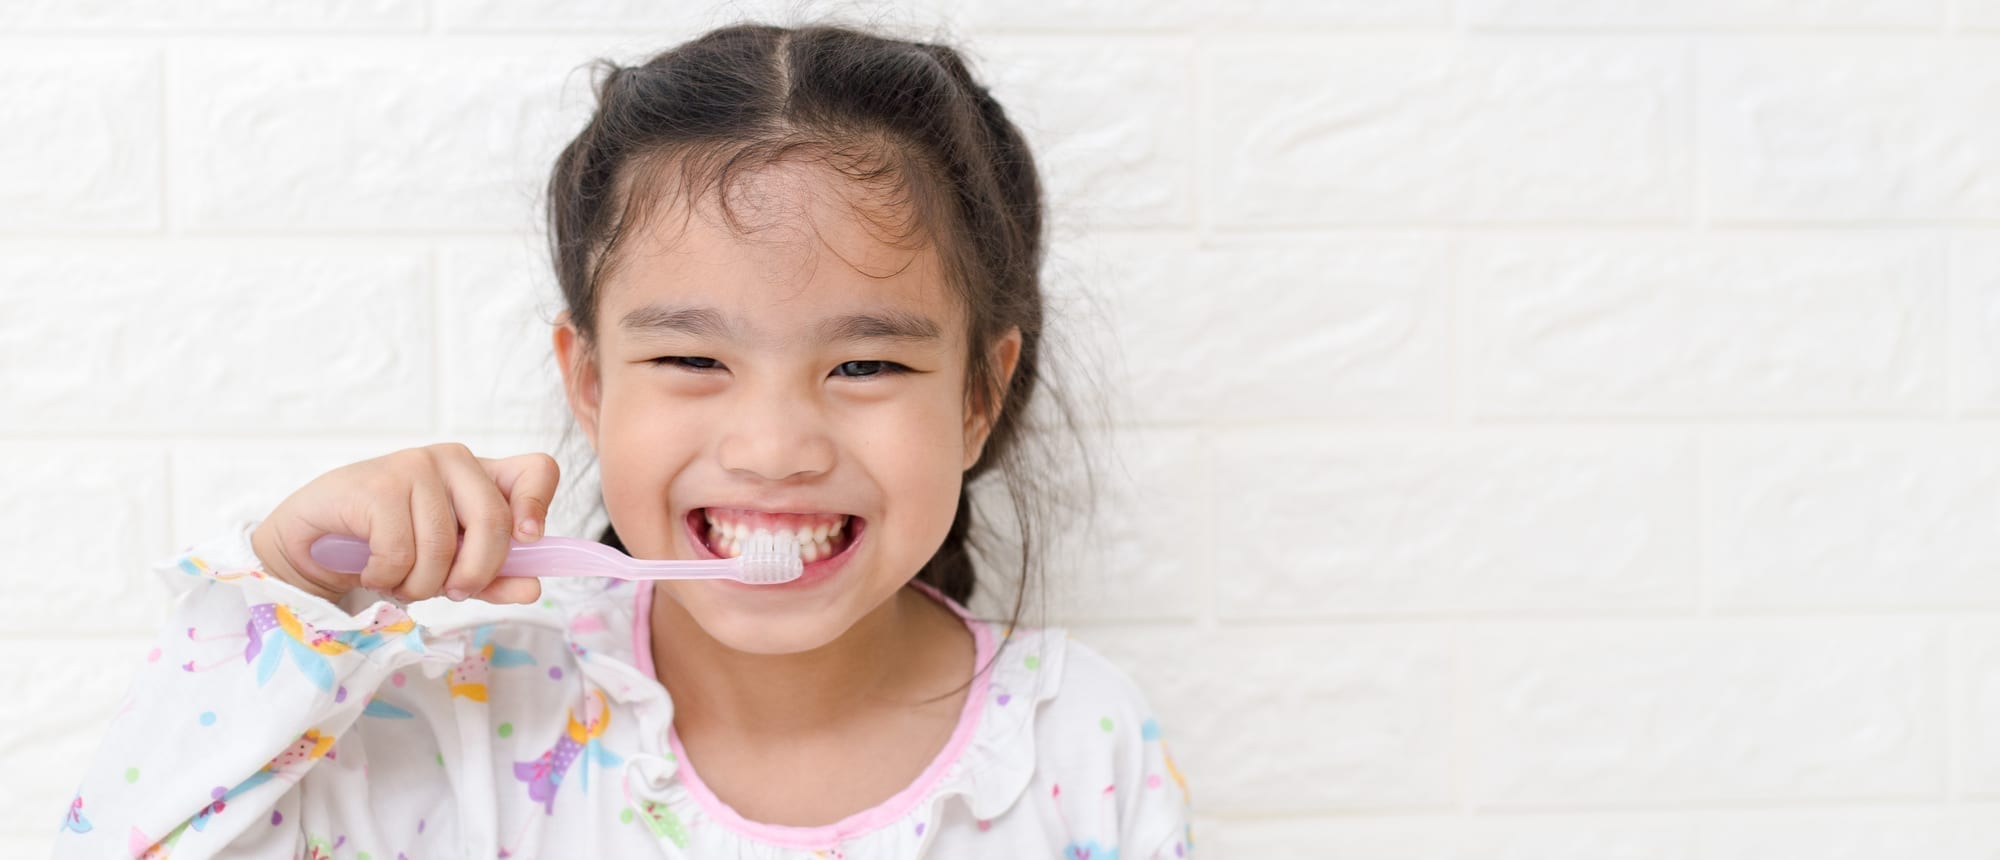 Parents Beware: 5 Common Oral Health Problems in Children